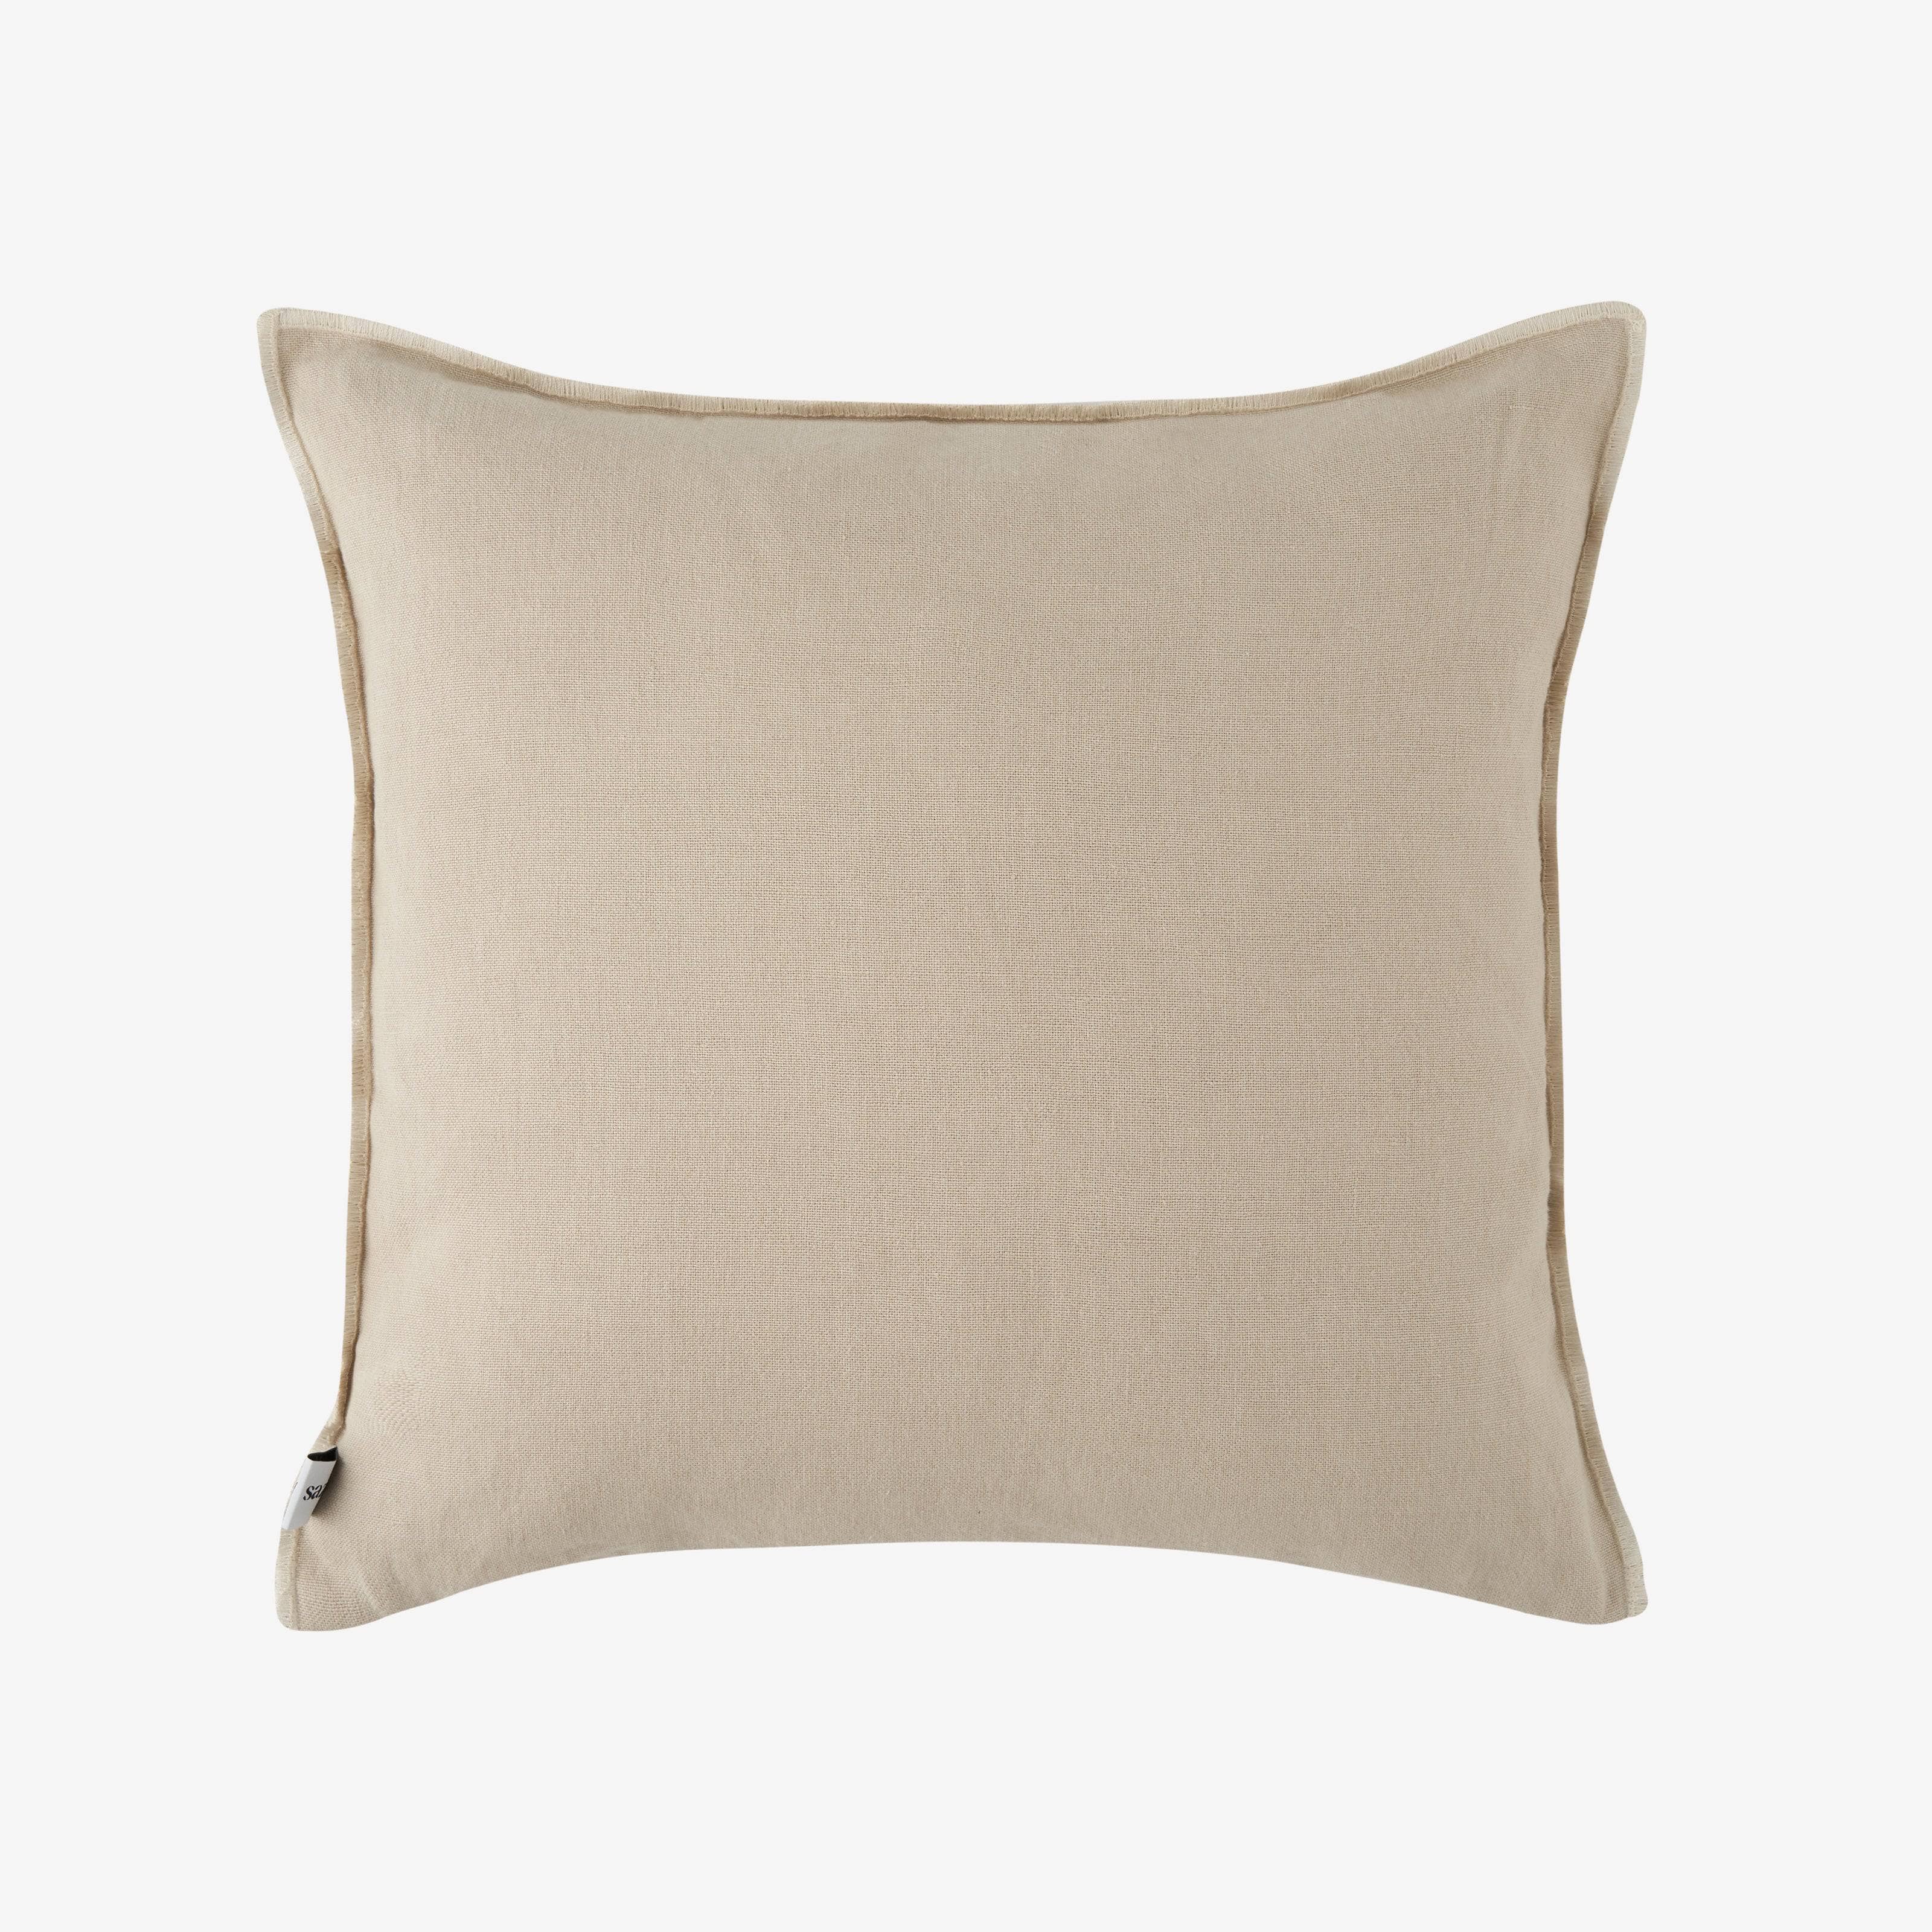 Lido Striped Linen Cushion Cover, Natural - Beige, 45x45 cm - 2